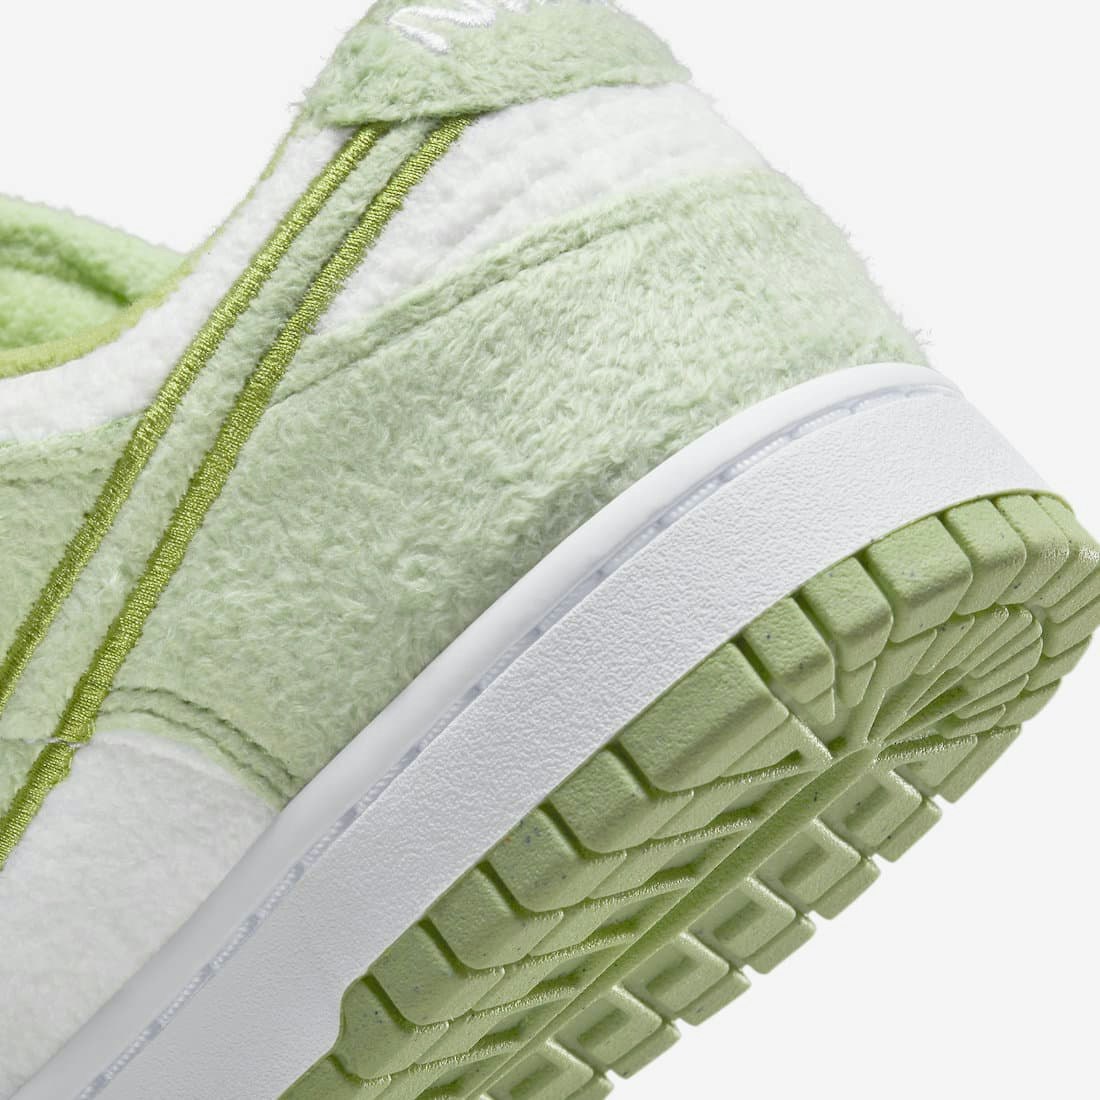 Nike Dunk Low “Fleece” (Green)